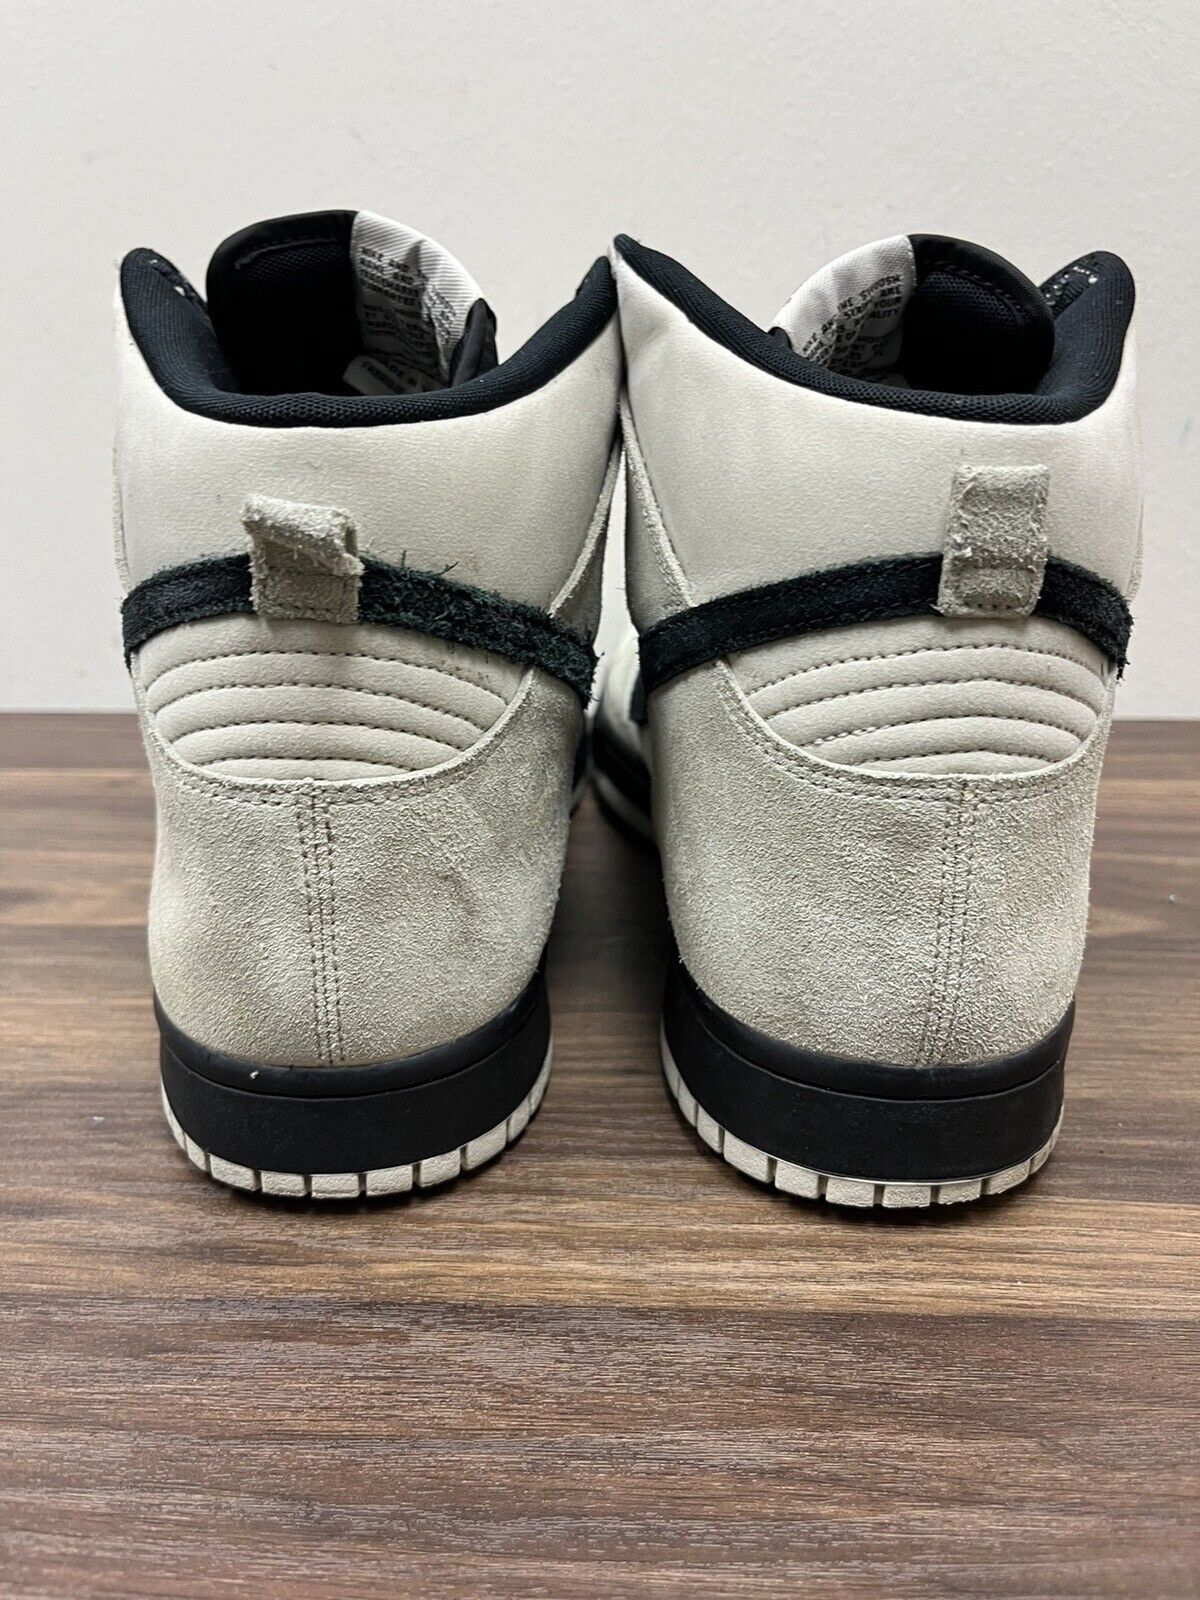 Nike Dunk High Light Bone Black Size 13 Sneakers Shoes 904233-002